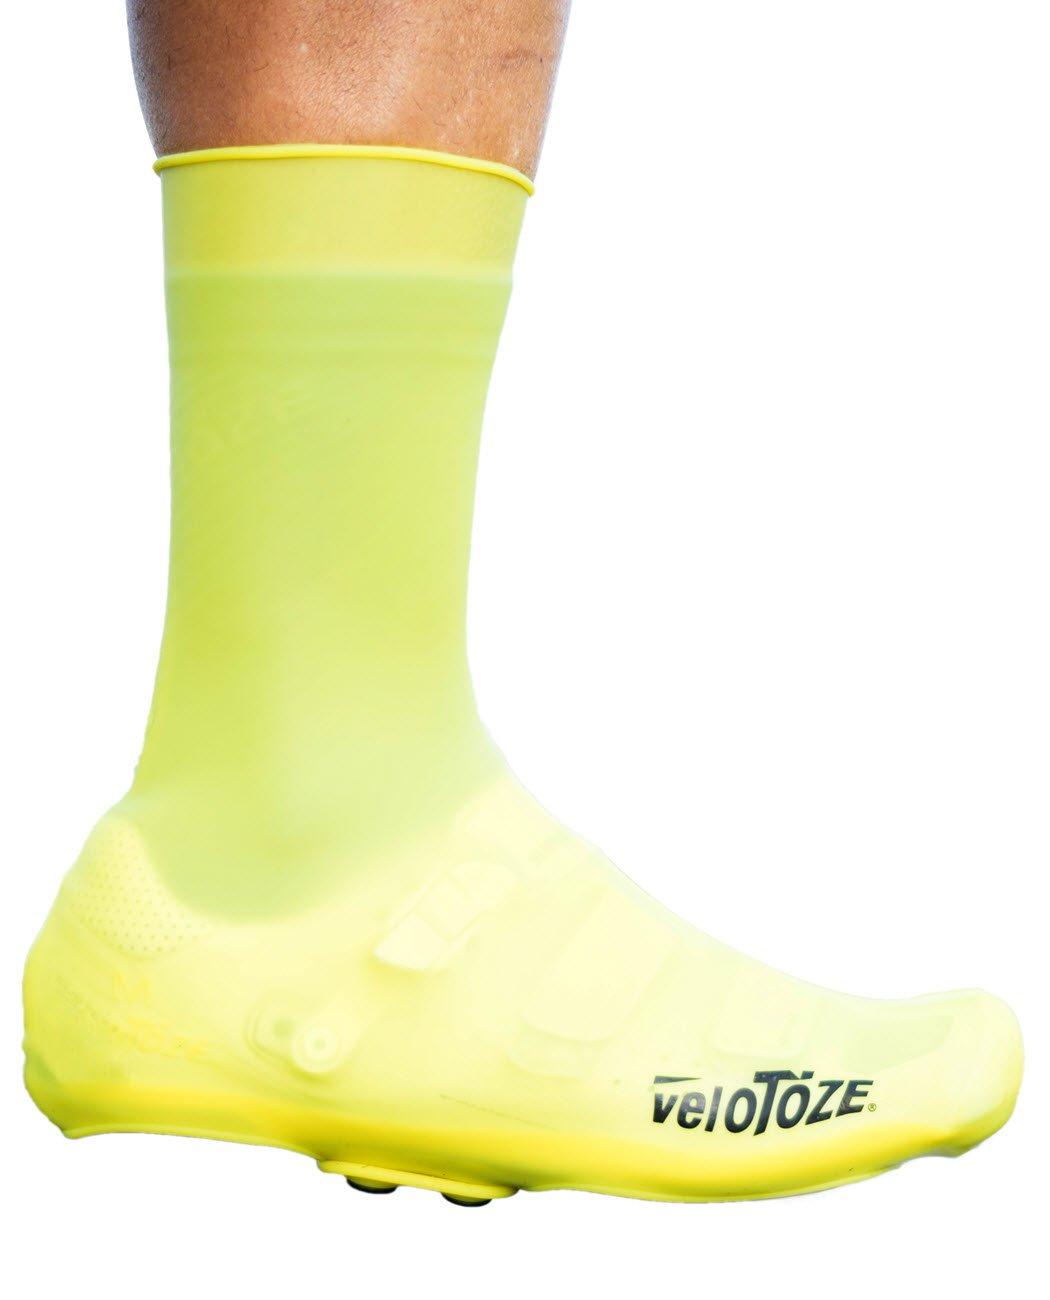 Velotoze Silicone Shoe Cover (tall)  Hi-viz Yellow